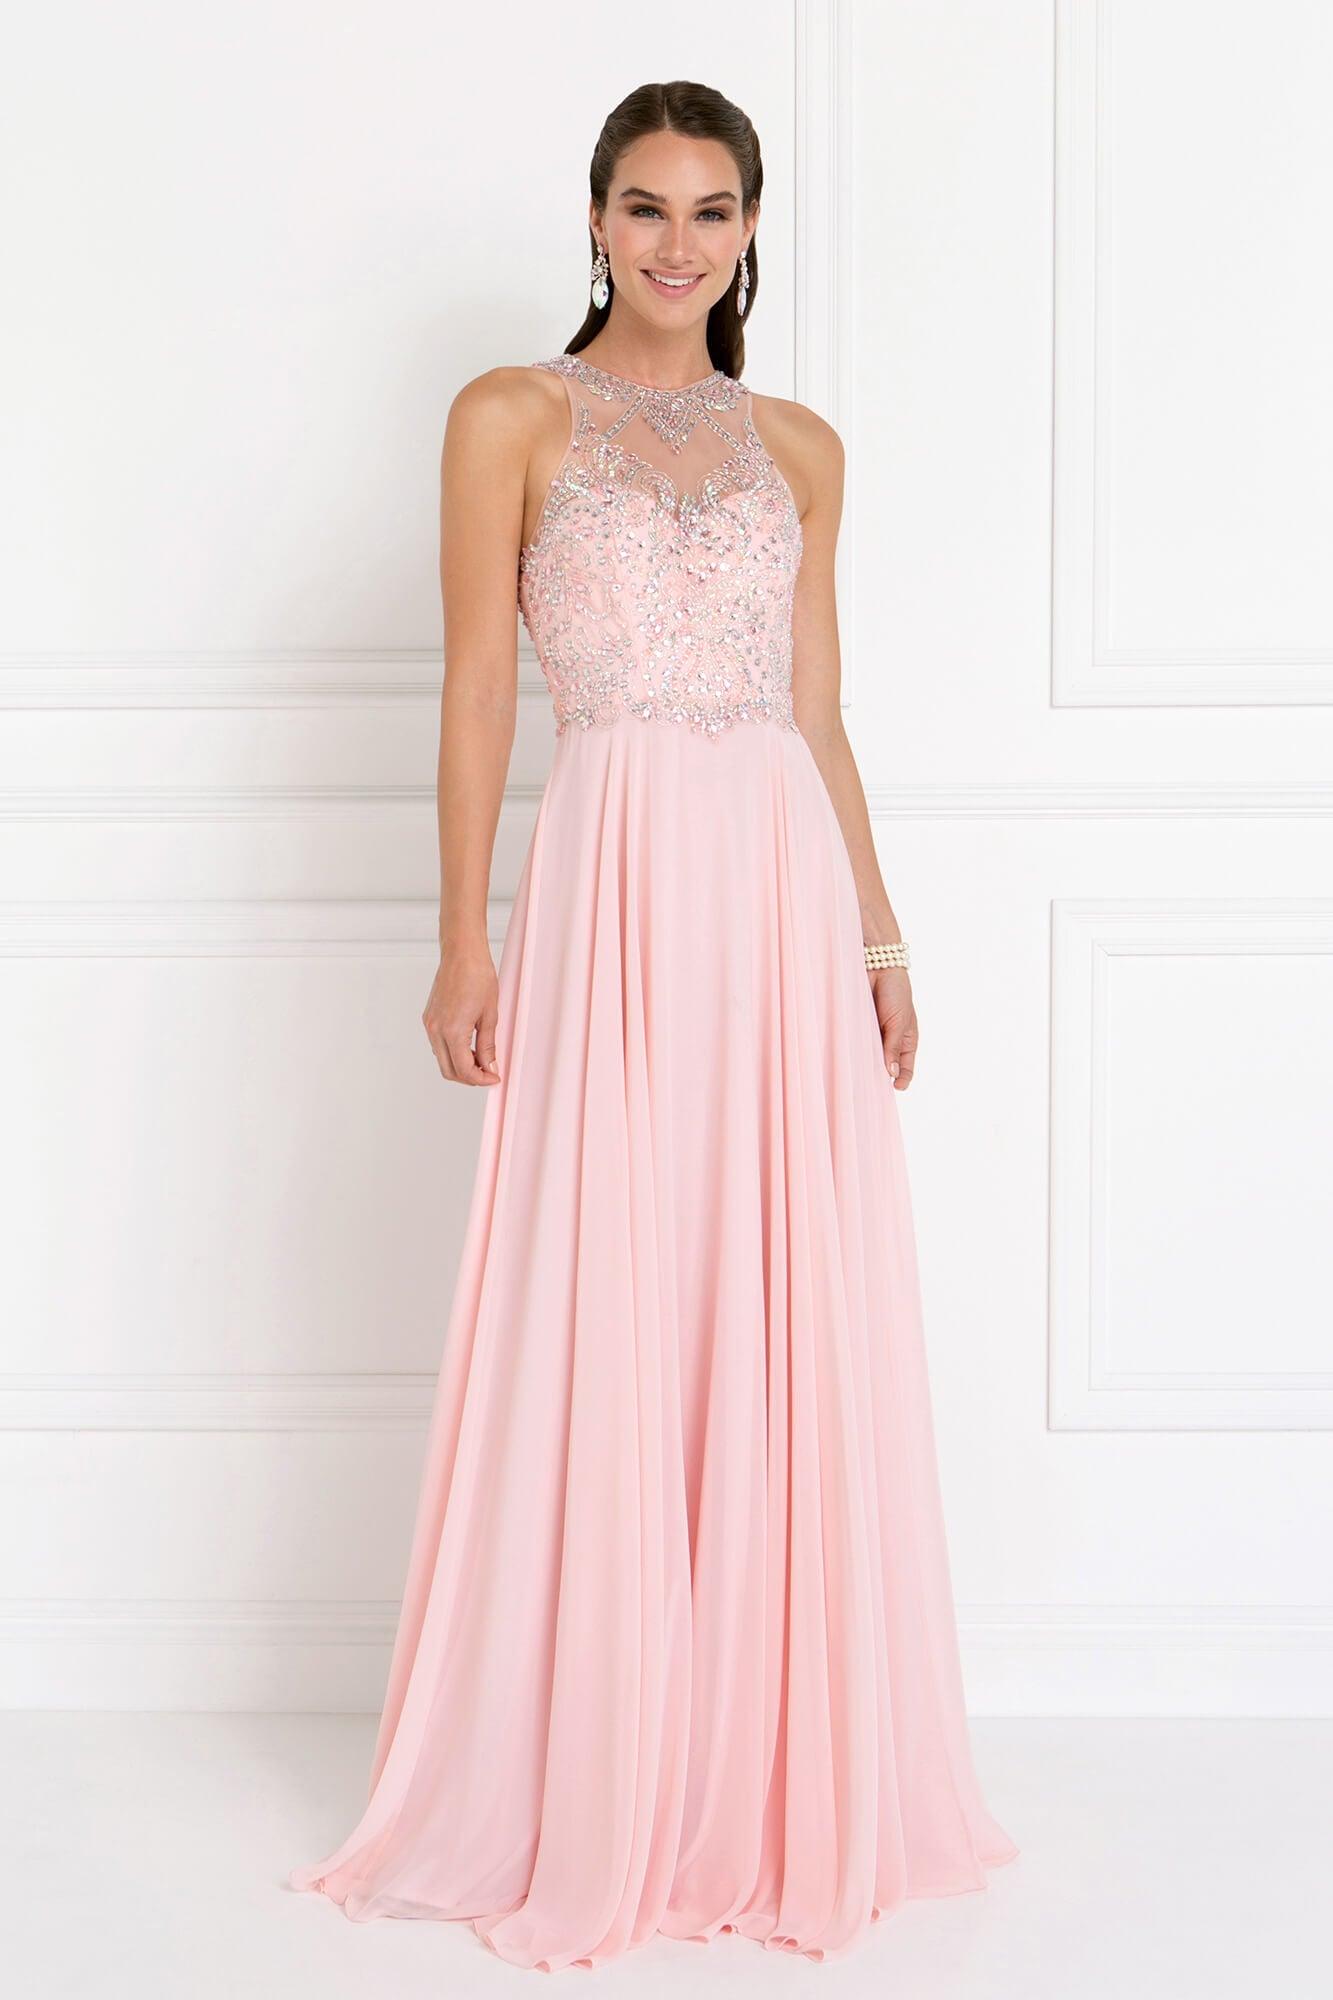 Prom Long Formal Chiffon Dress Evening Gown - The Dress Outlet Elizabeth K